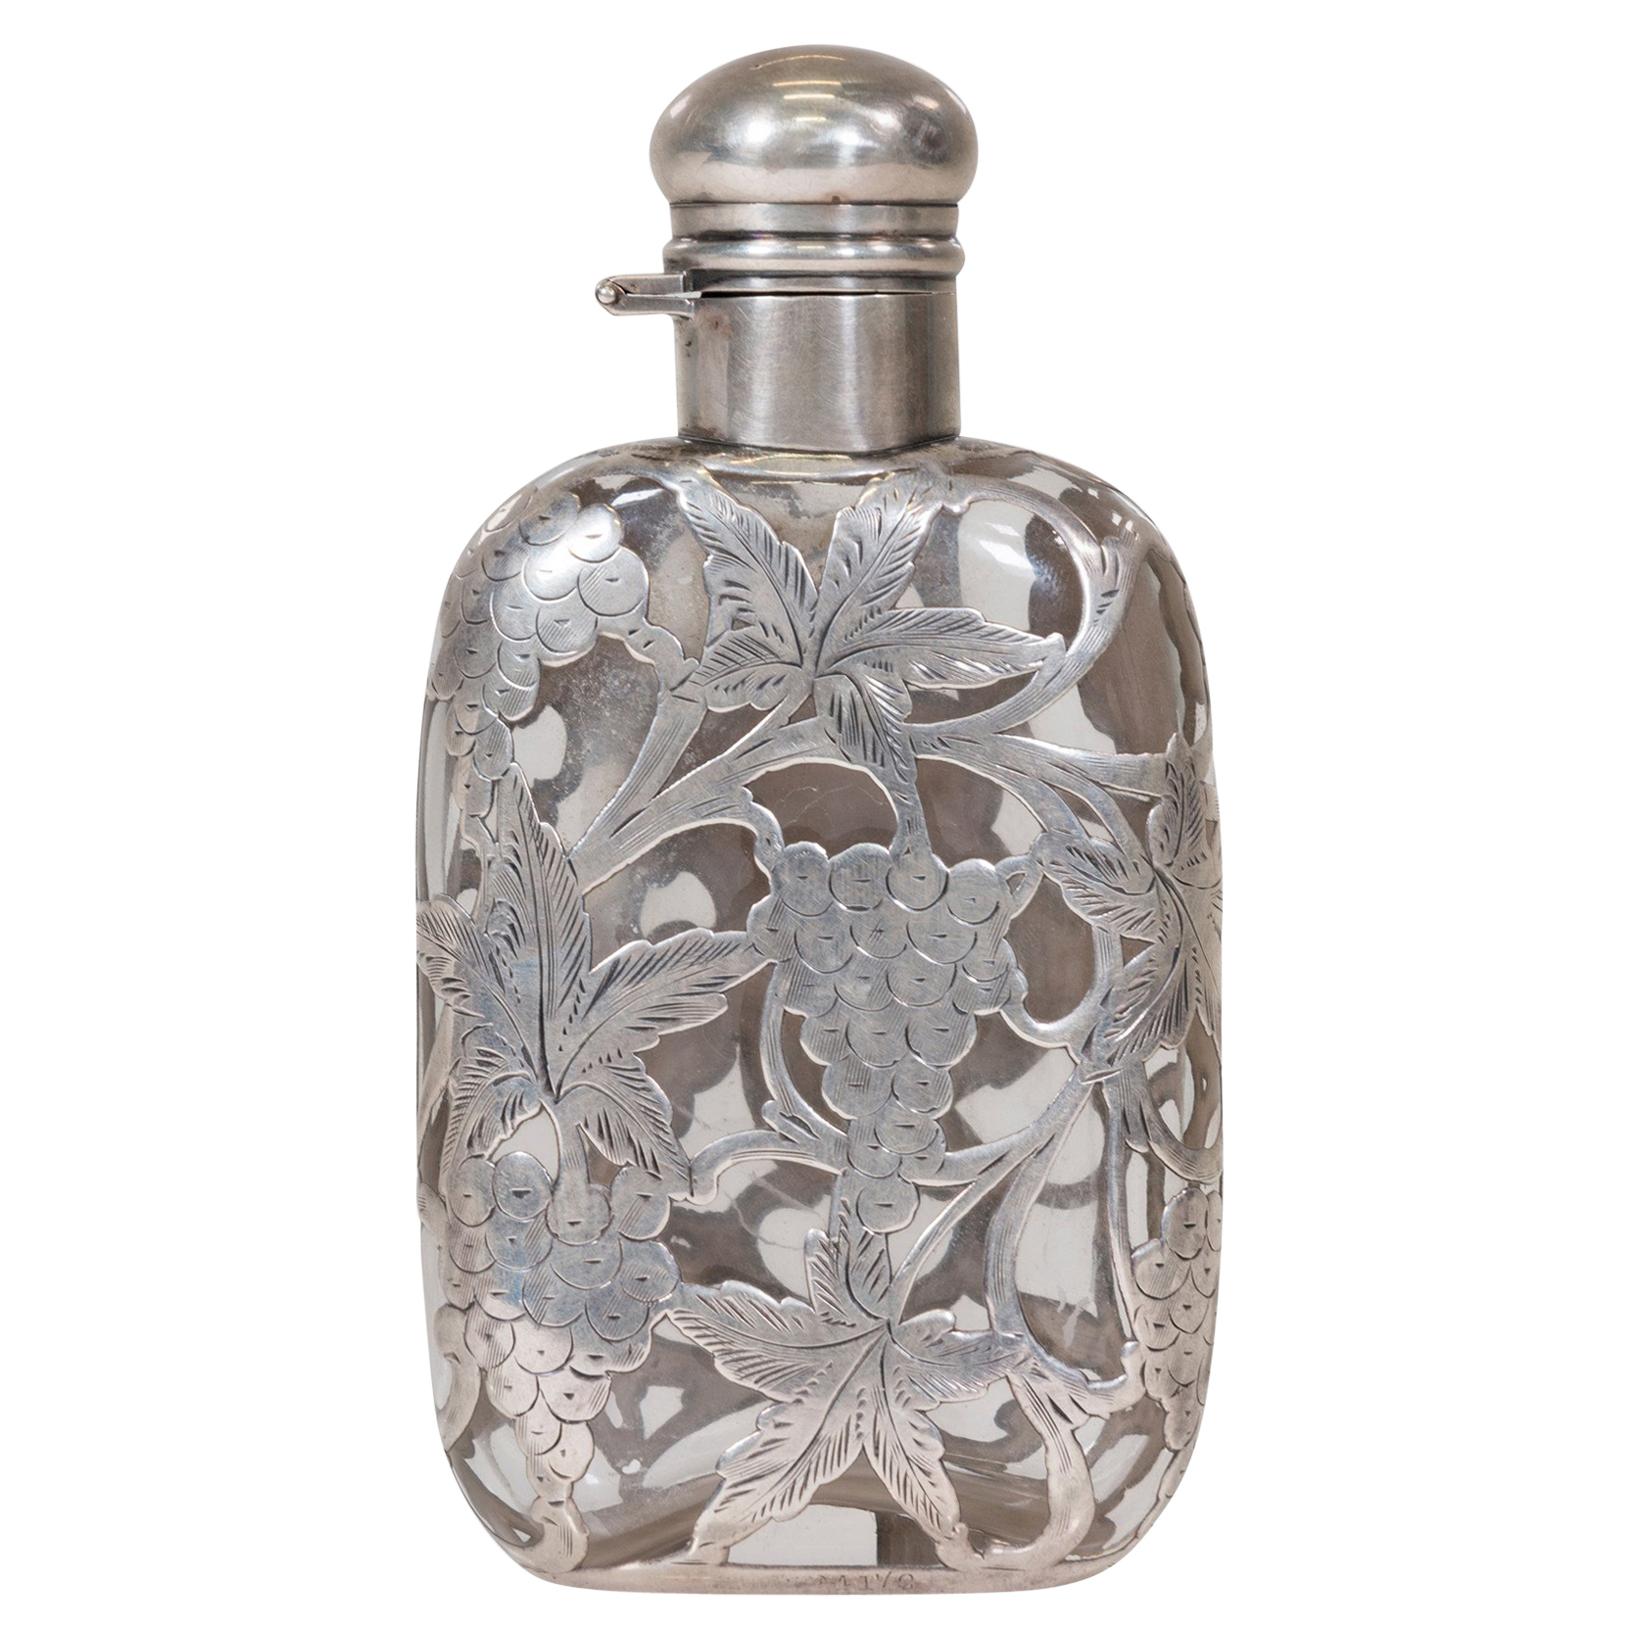 Stunning Sterling Silver Flask